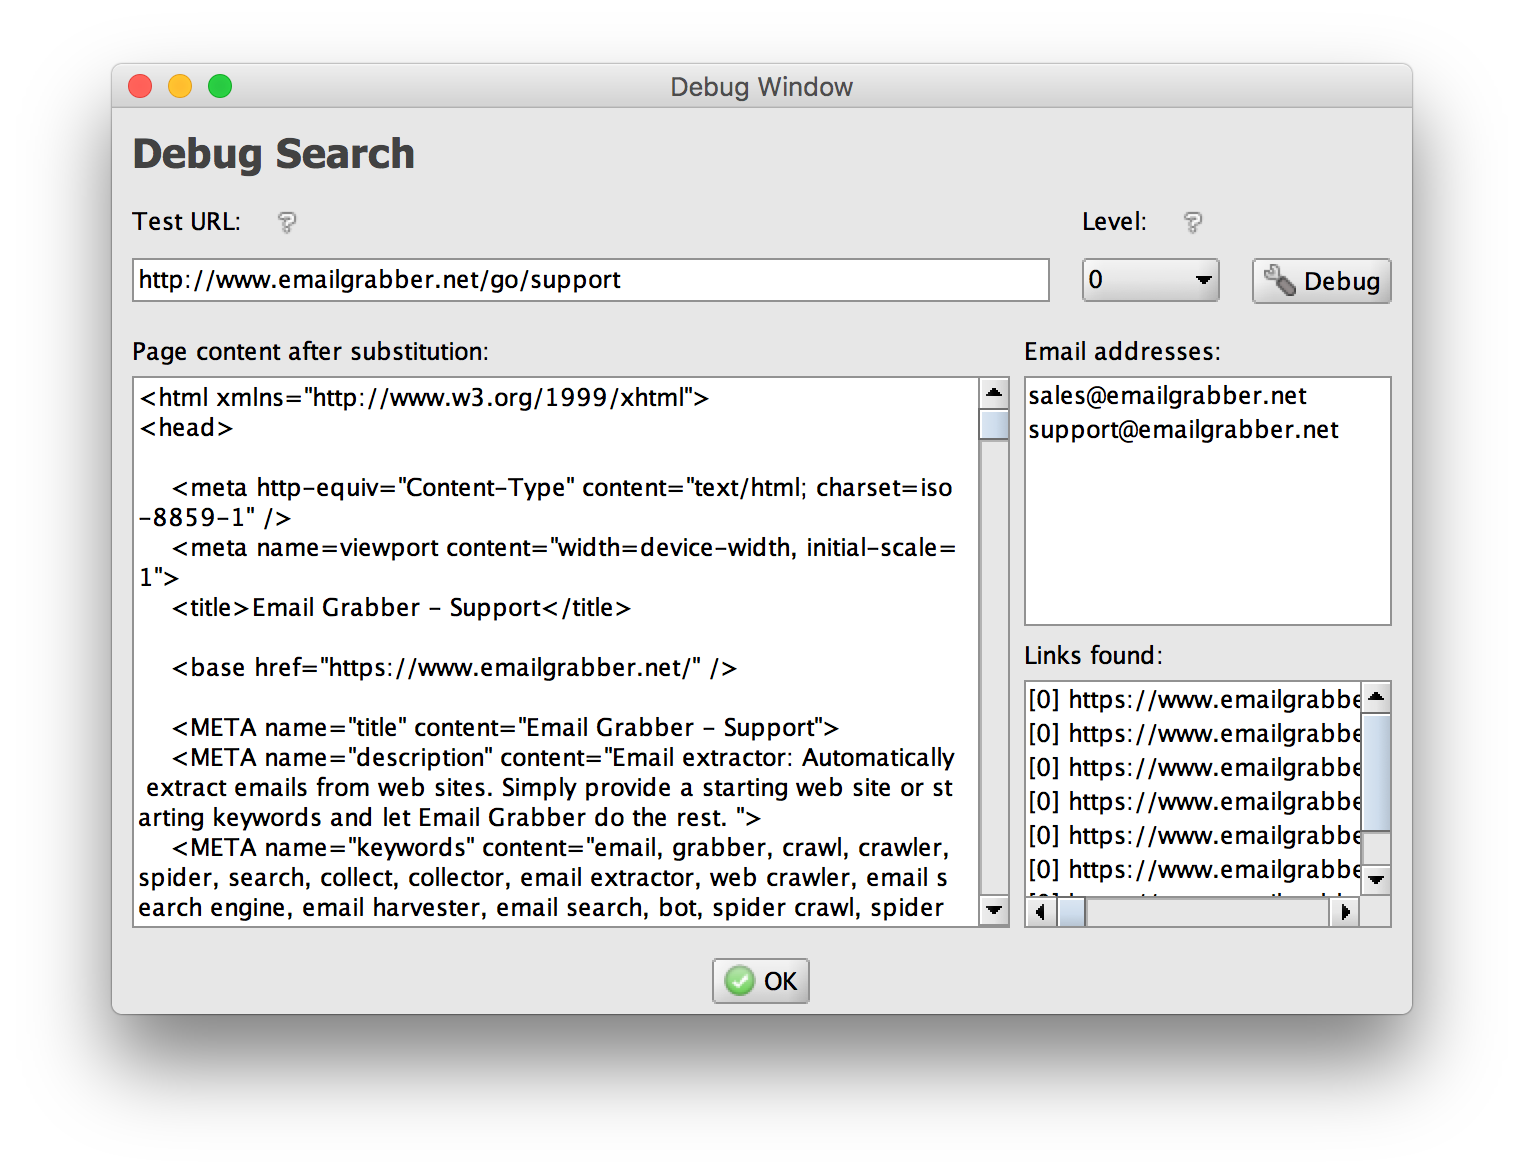 Email Grabber's Debug Search screenshot